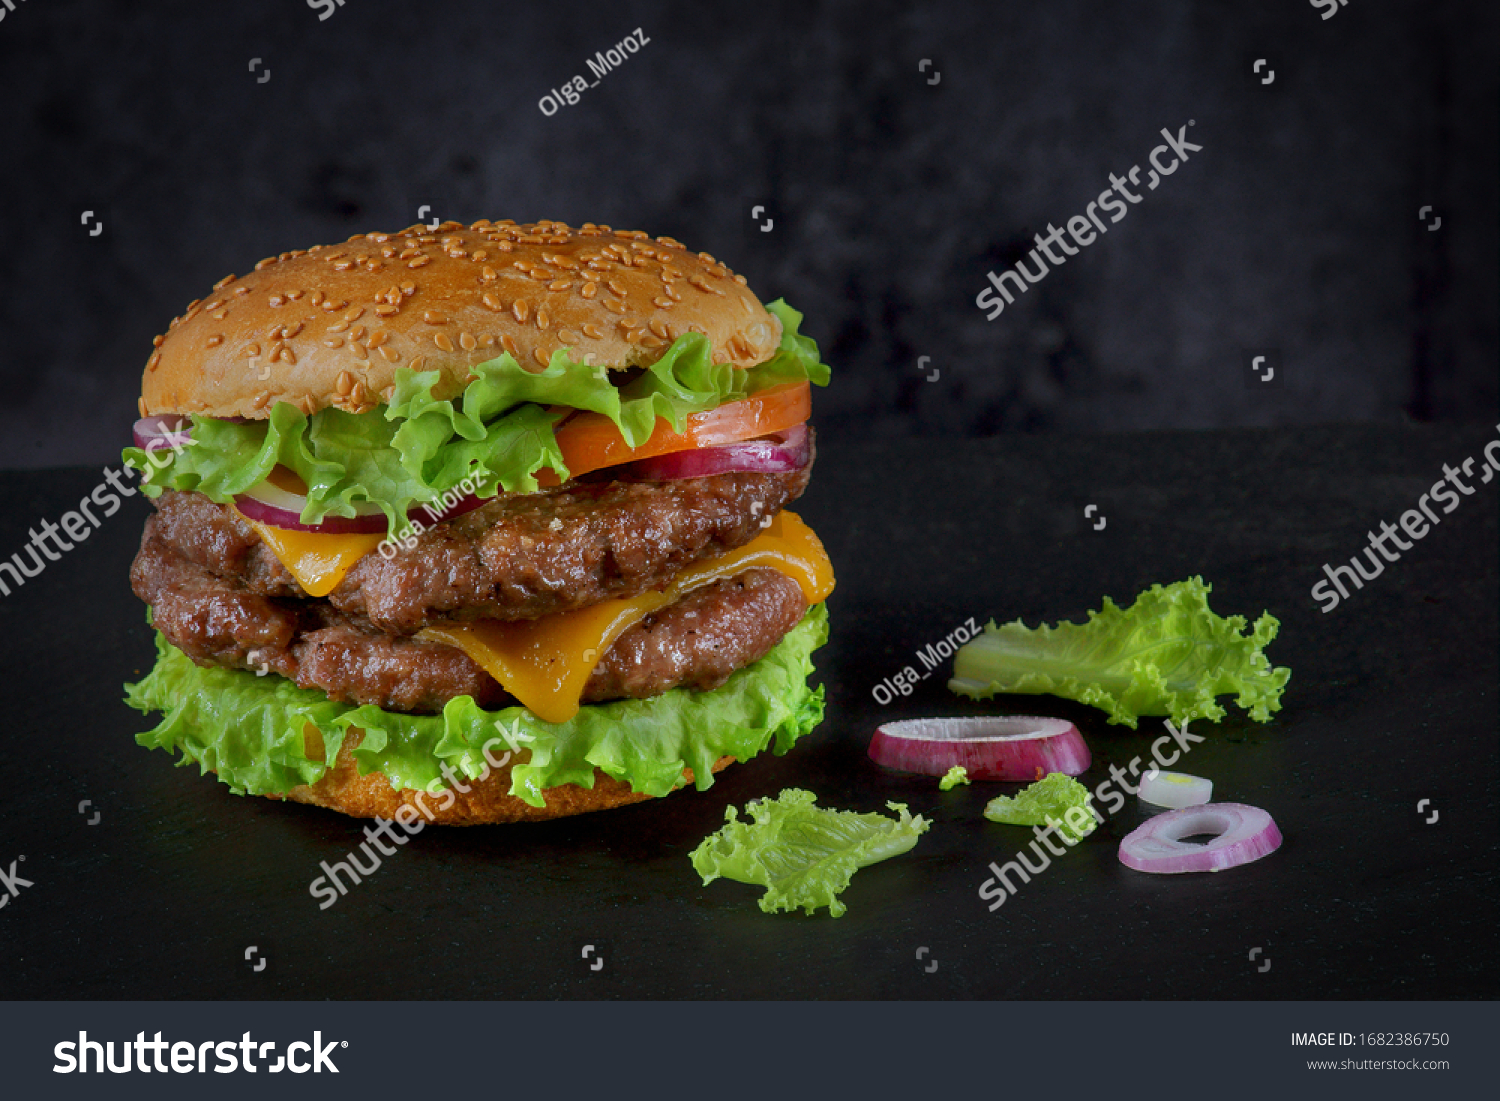 2,603 Double patty burger Images, Stock Photos & Vectors | Shutterstock